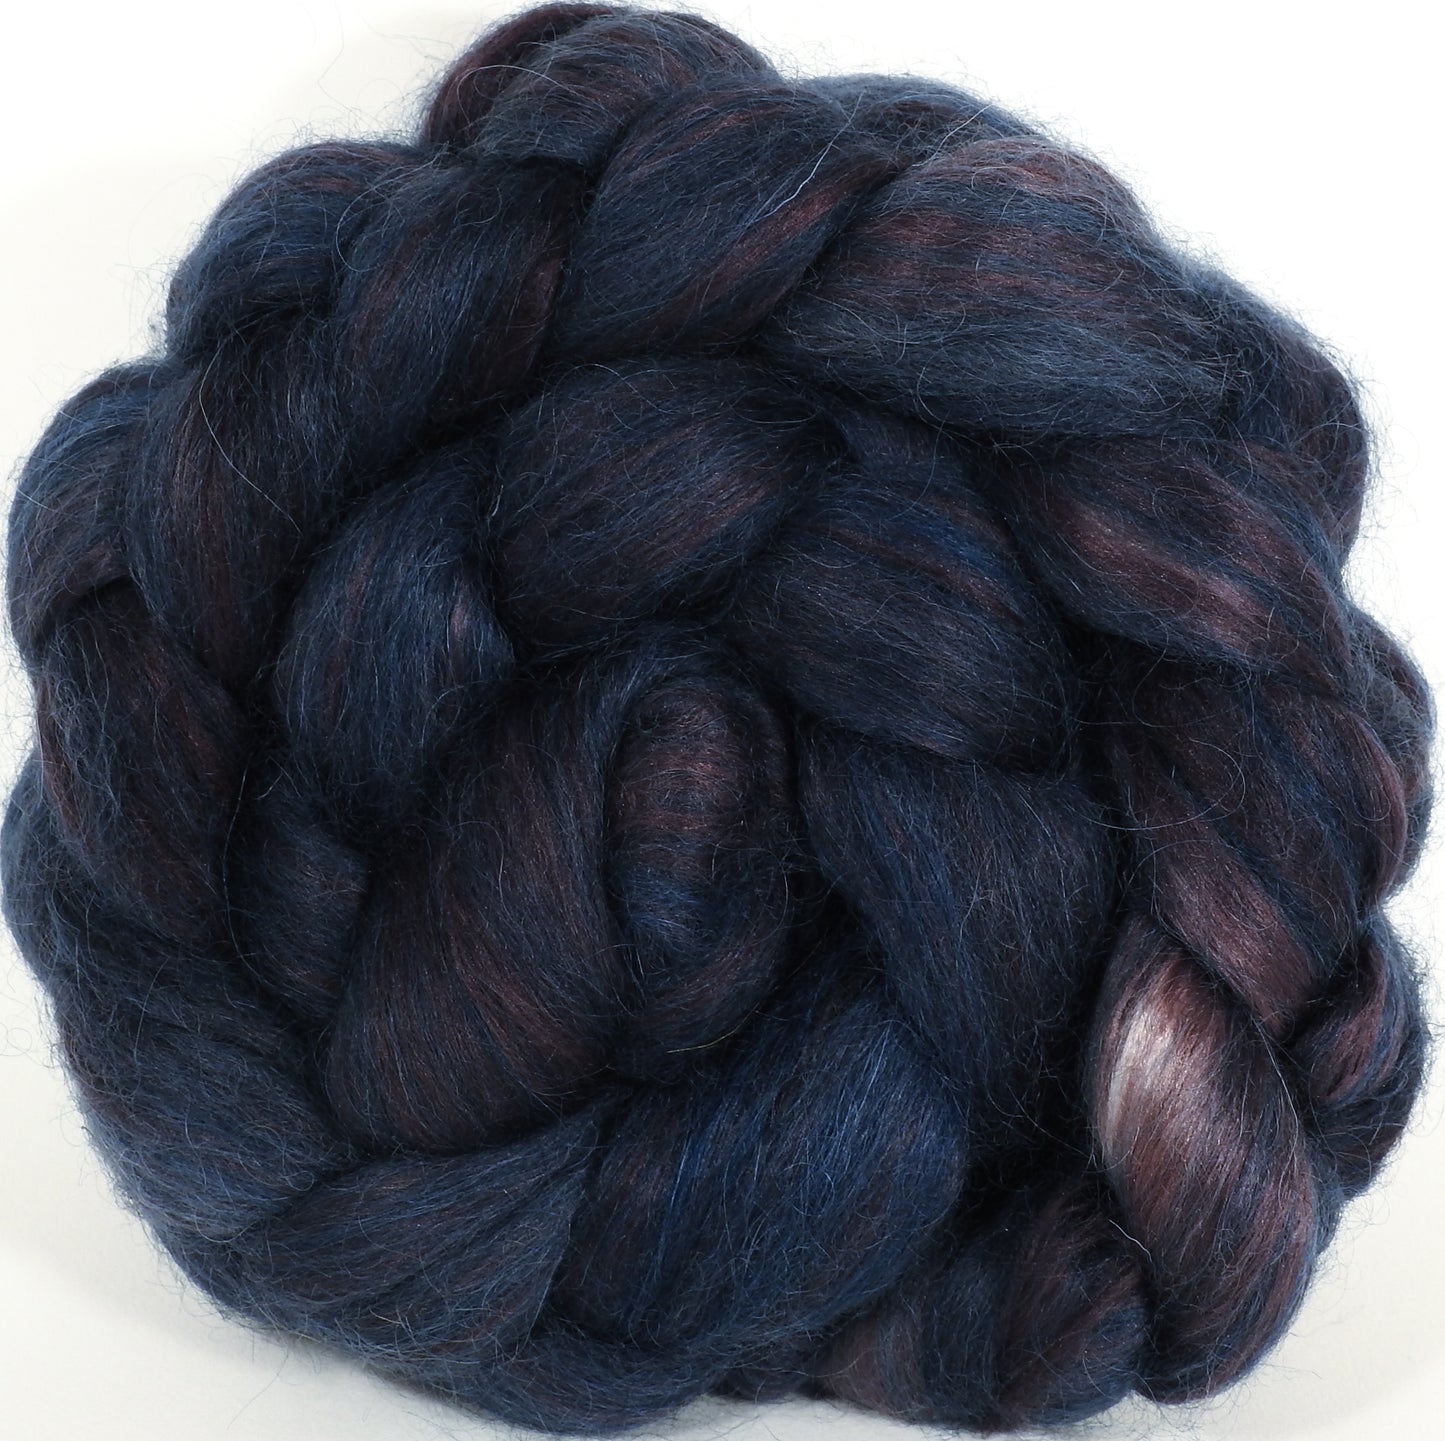 Hand-dyed wensleydale/ mulberry silk roving ( 65/35) -Licorice - Inglenook Fibers